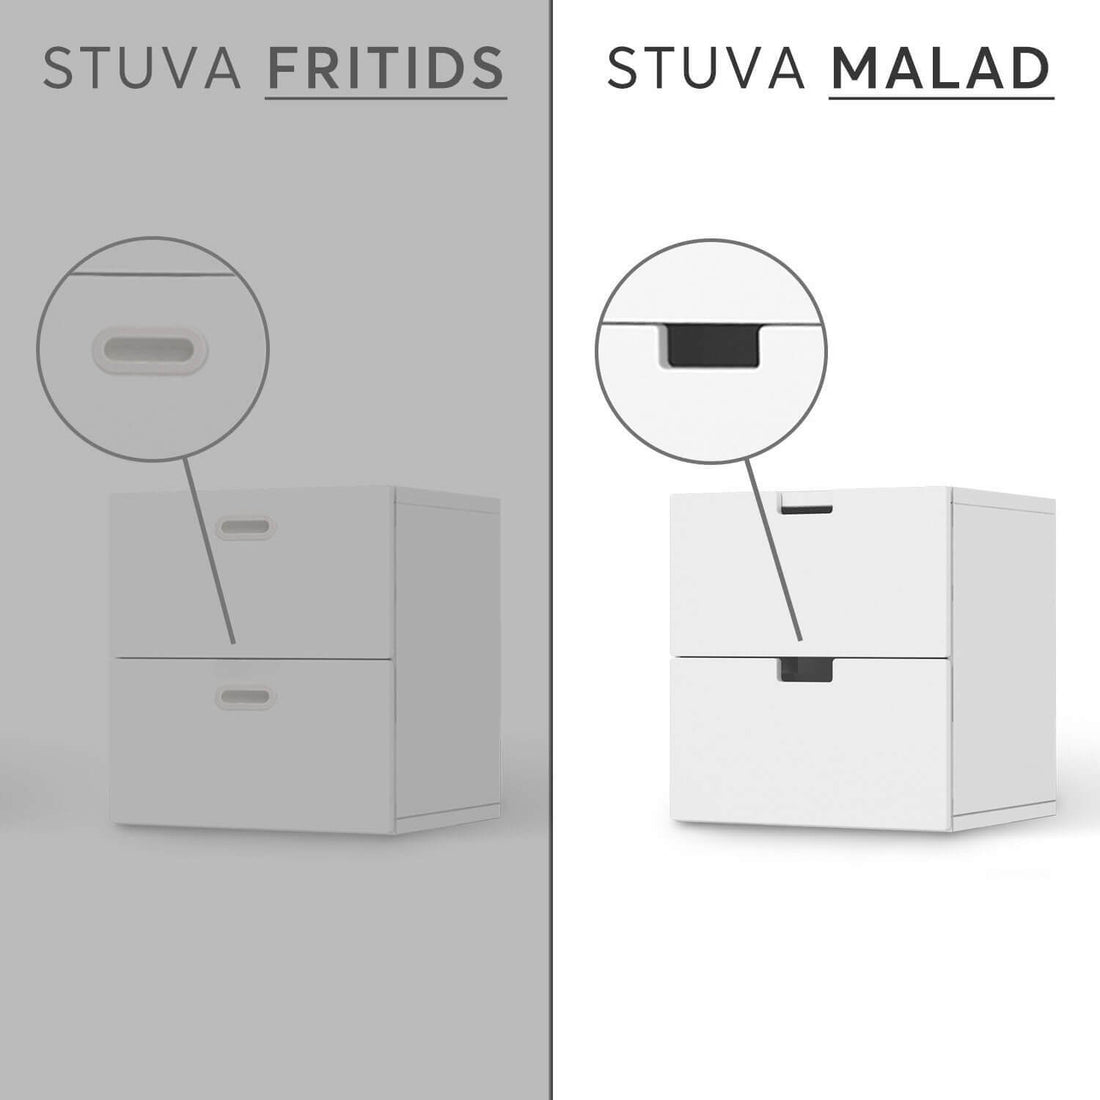 Vergleich IKEA Stuva Malad / Fritids - Pako